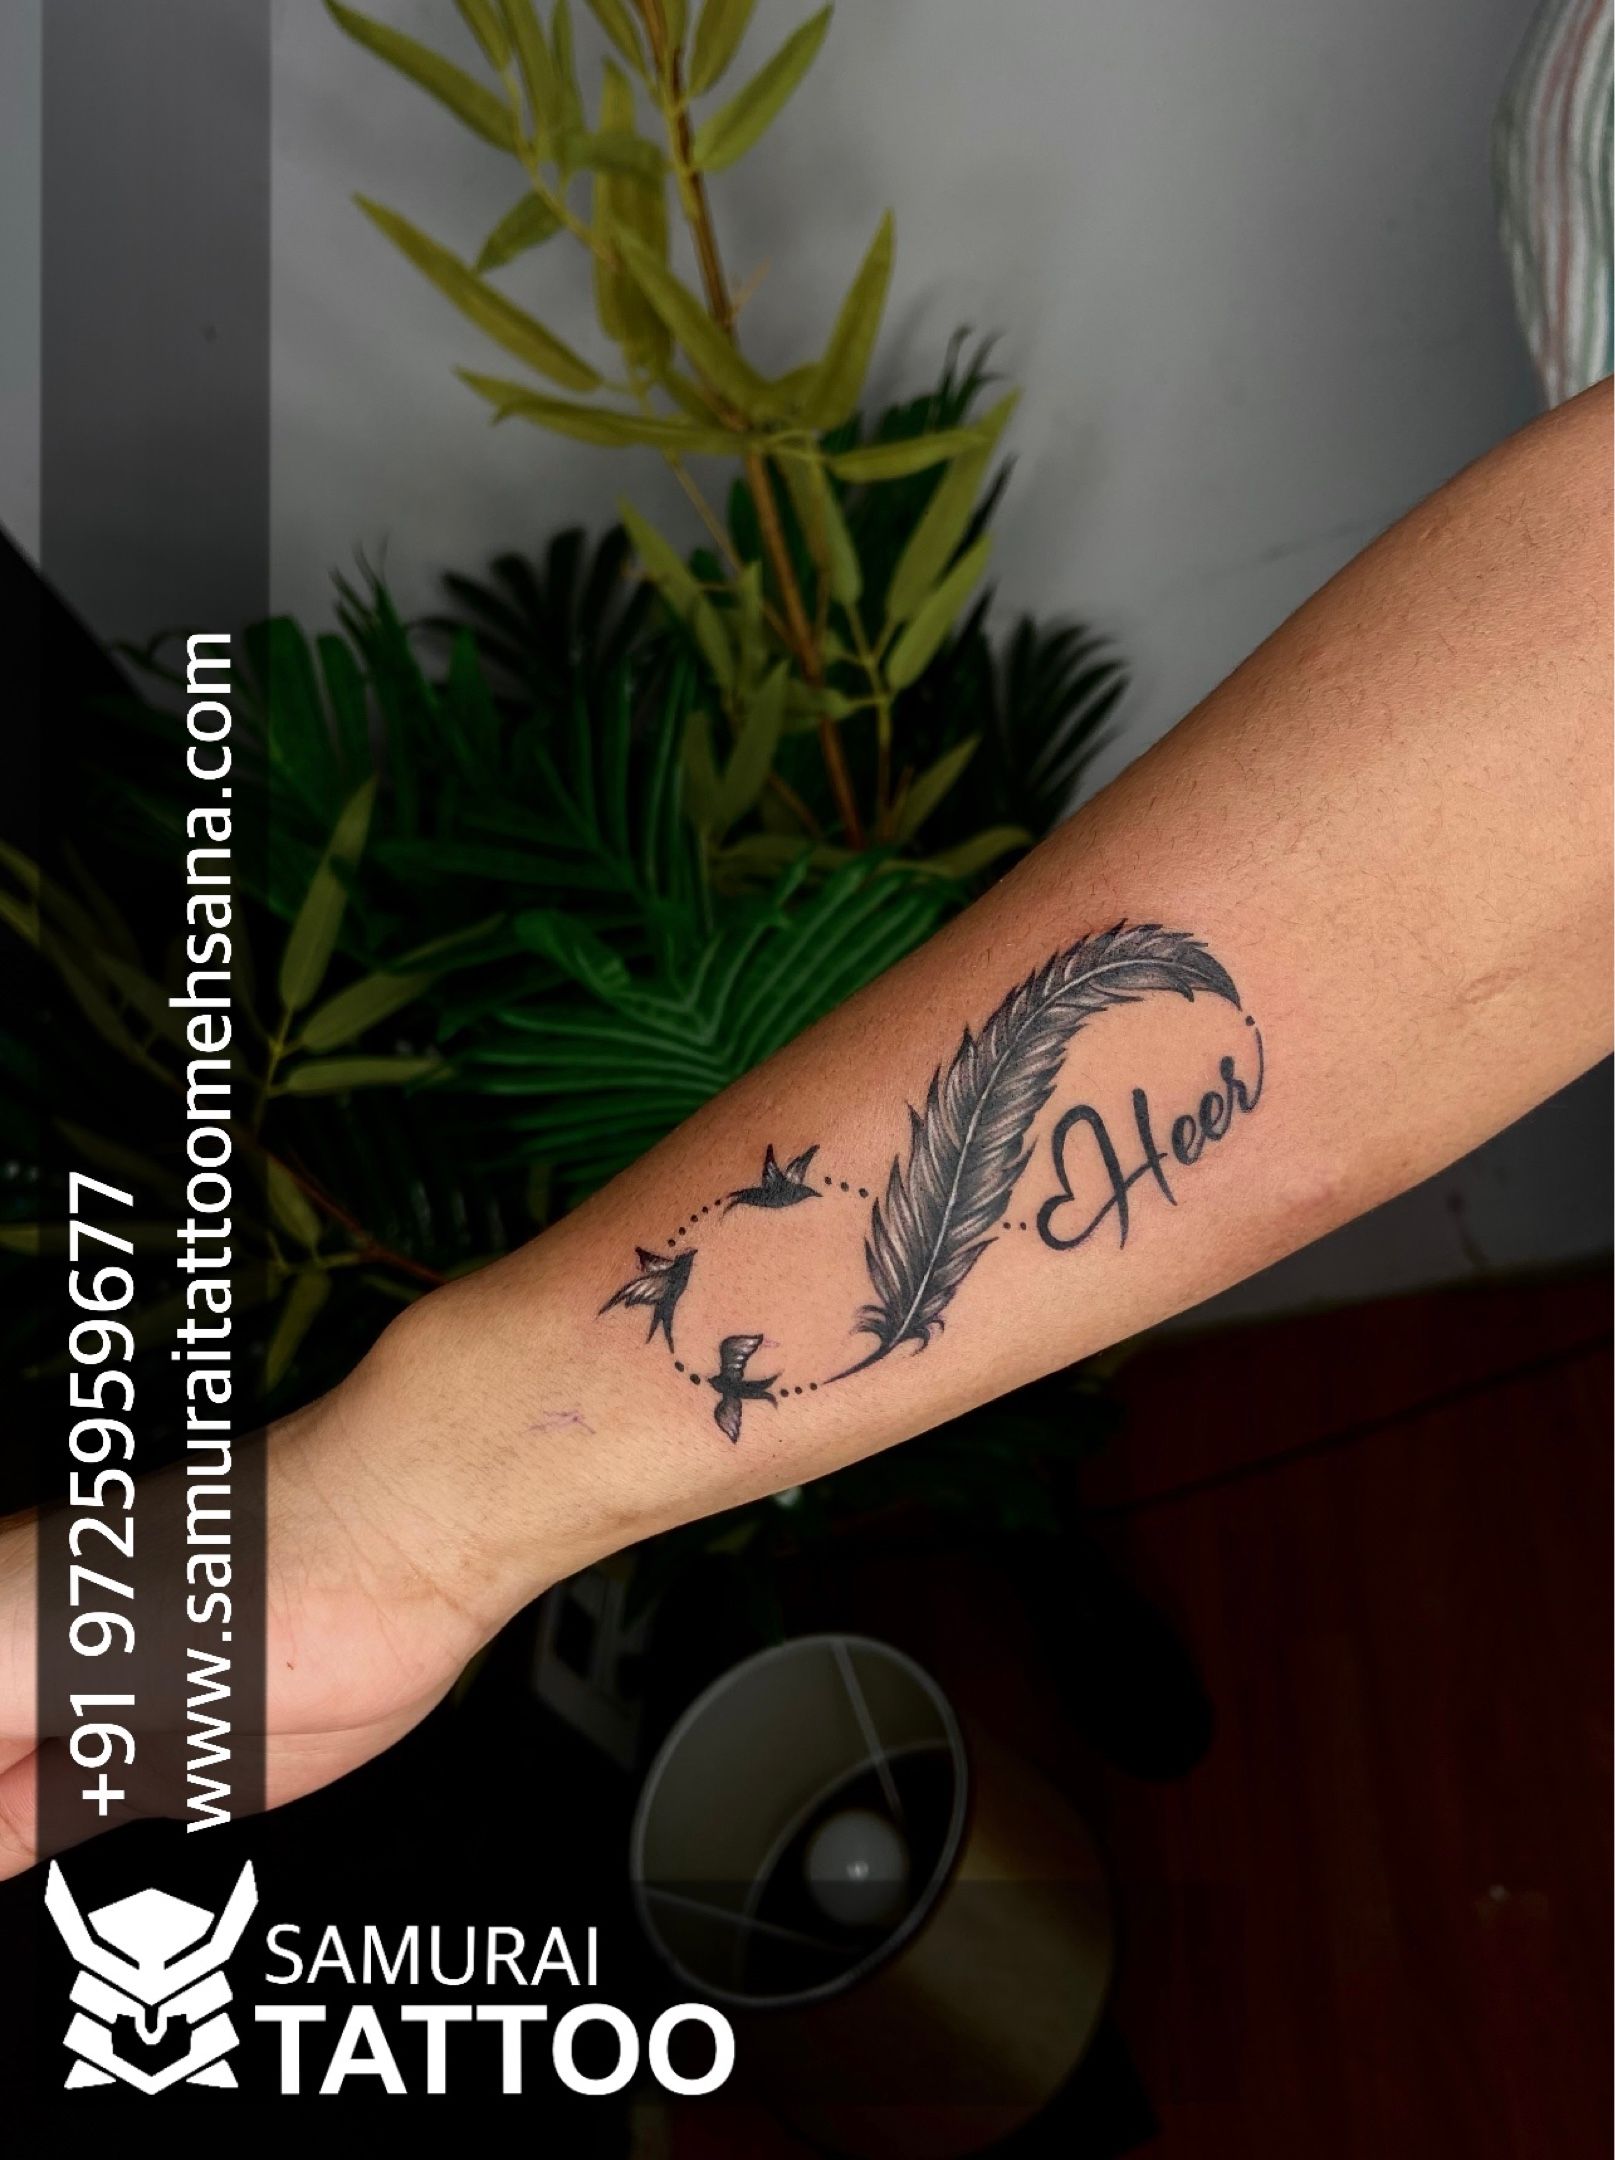 Bard tattoo design interested call  MRana tattoo studio  Facebook